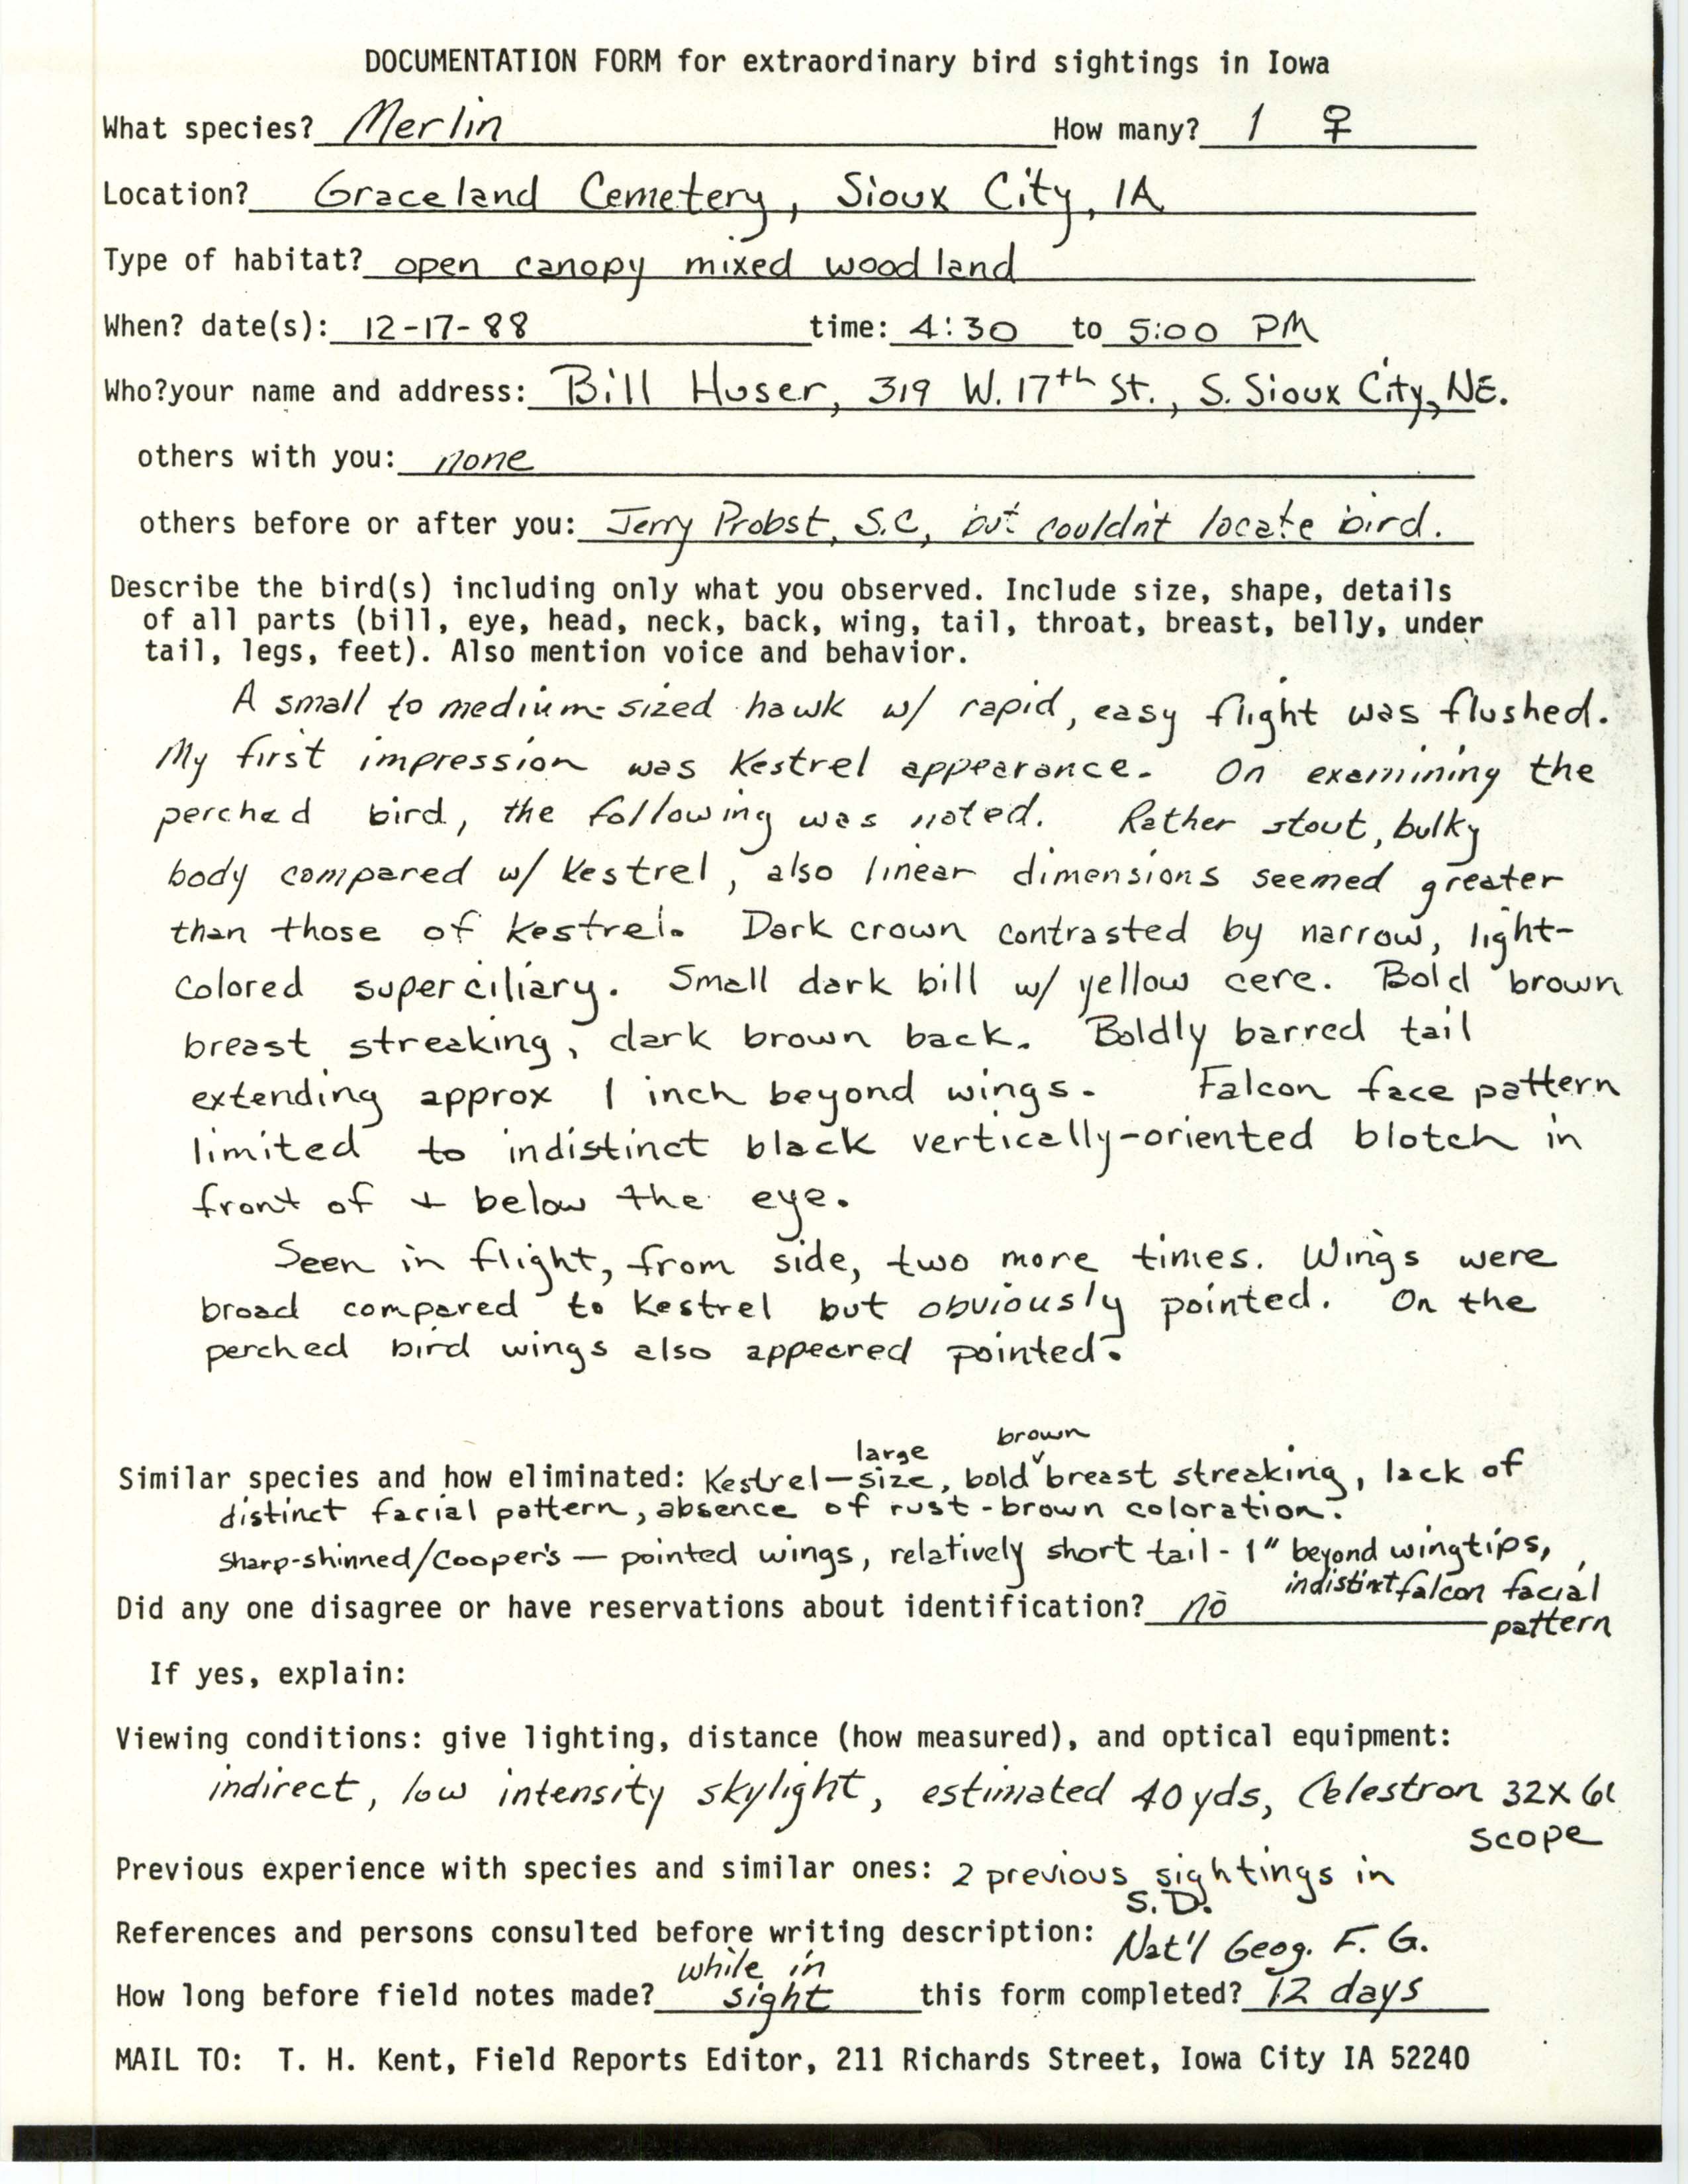 Rare bird documentation form for Merlin at Graceland Cemetery, 1988